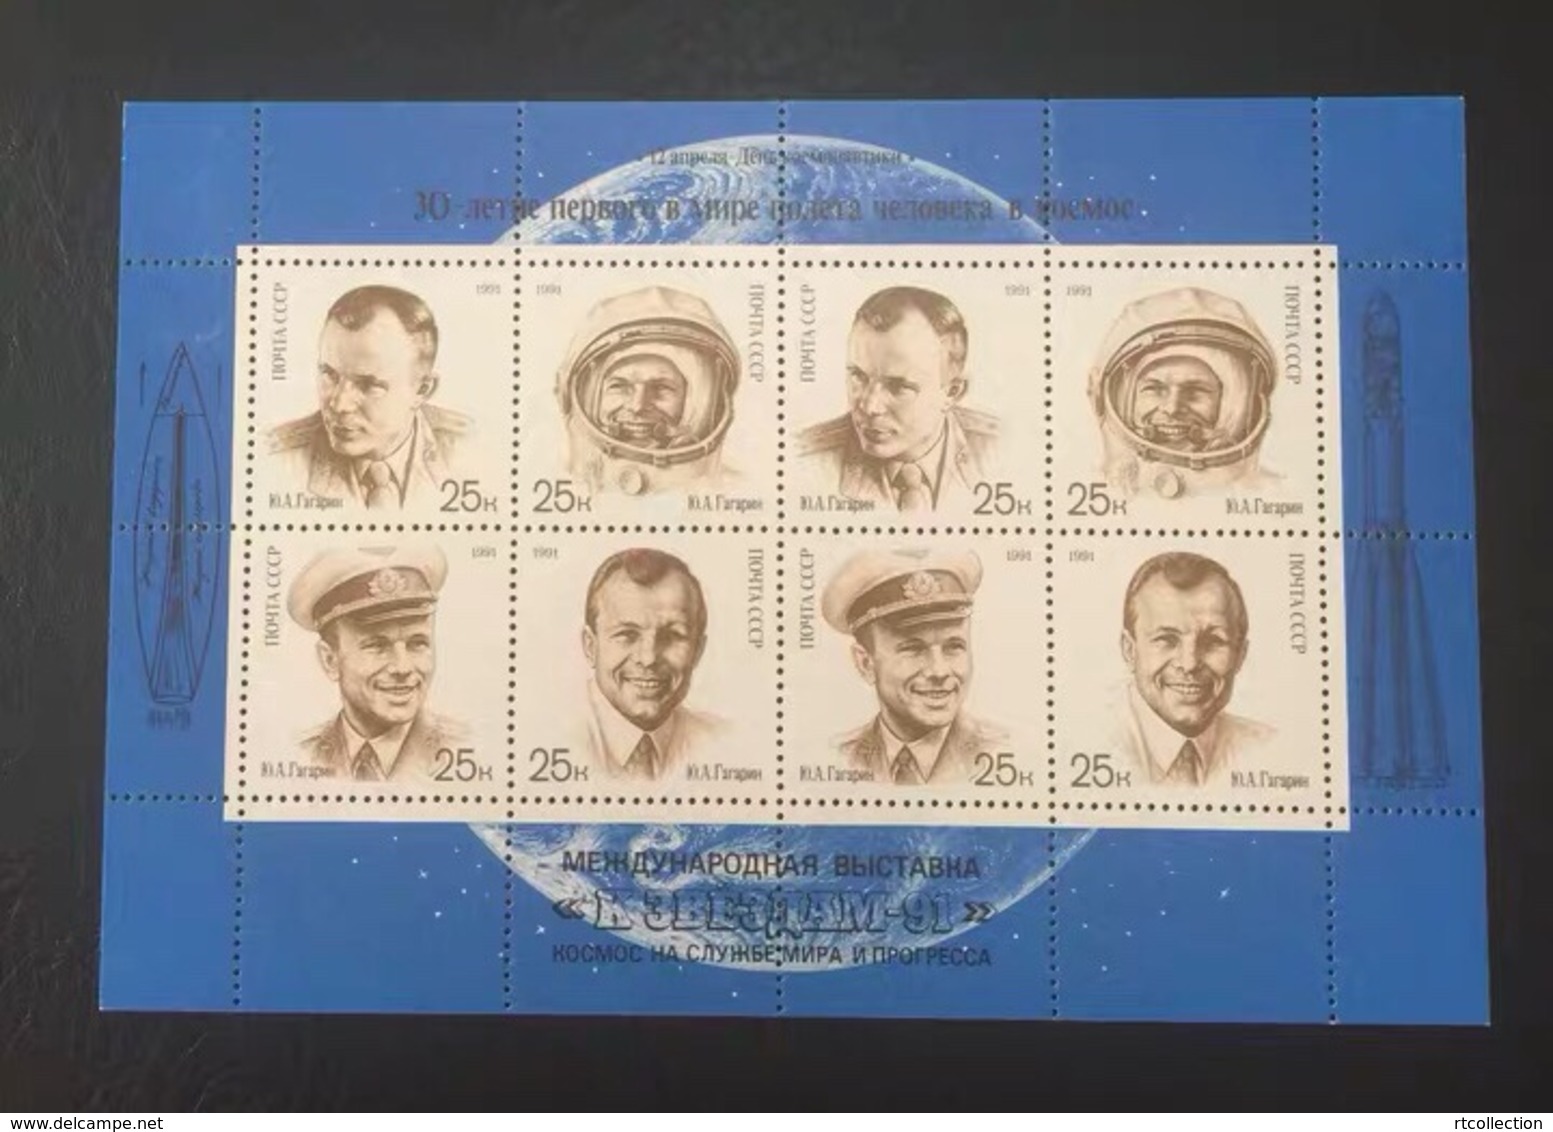 USSR Russia 1991 M/S 30th Anniv First Man In Space Cosmonautics Day Yuri Gagarin Explore Spacemen People Stamps MNH - Sammlungen